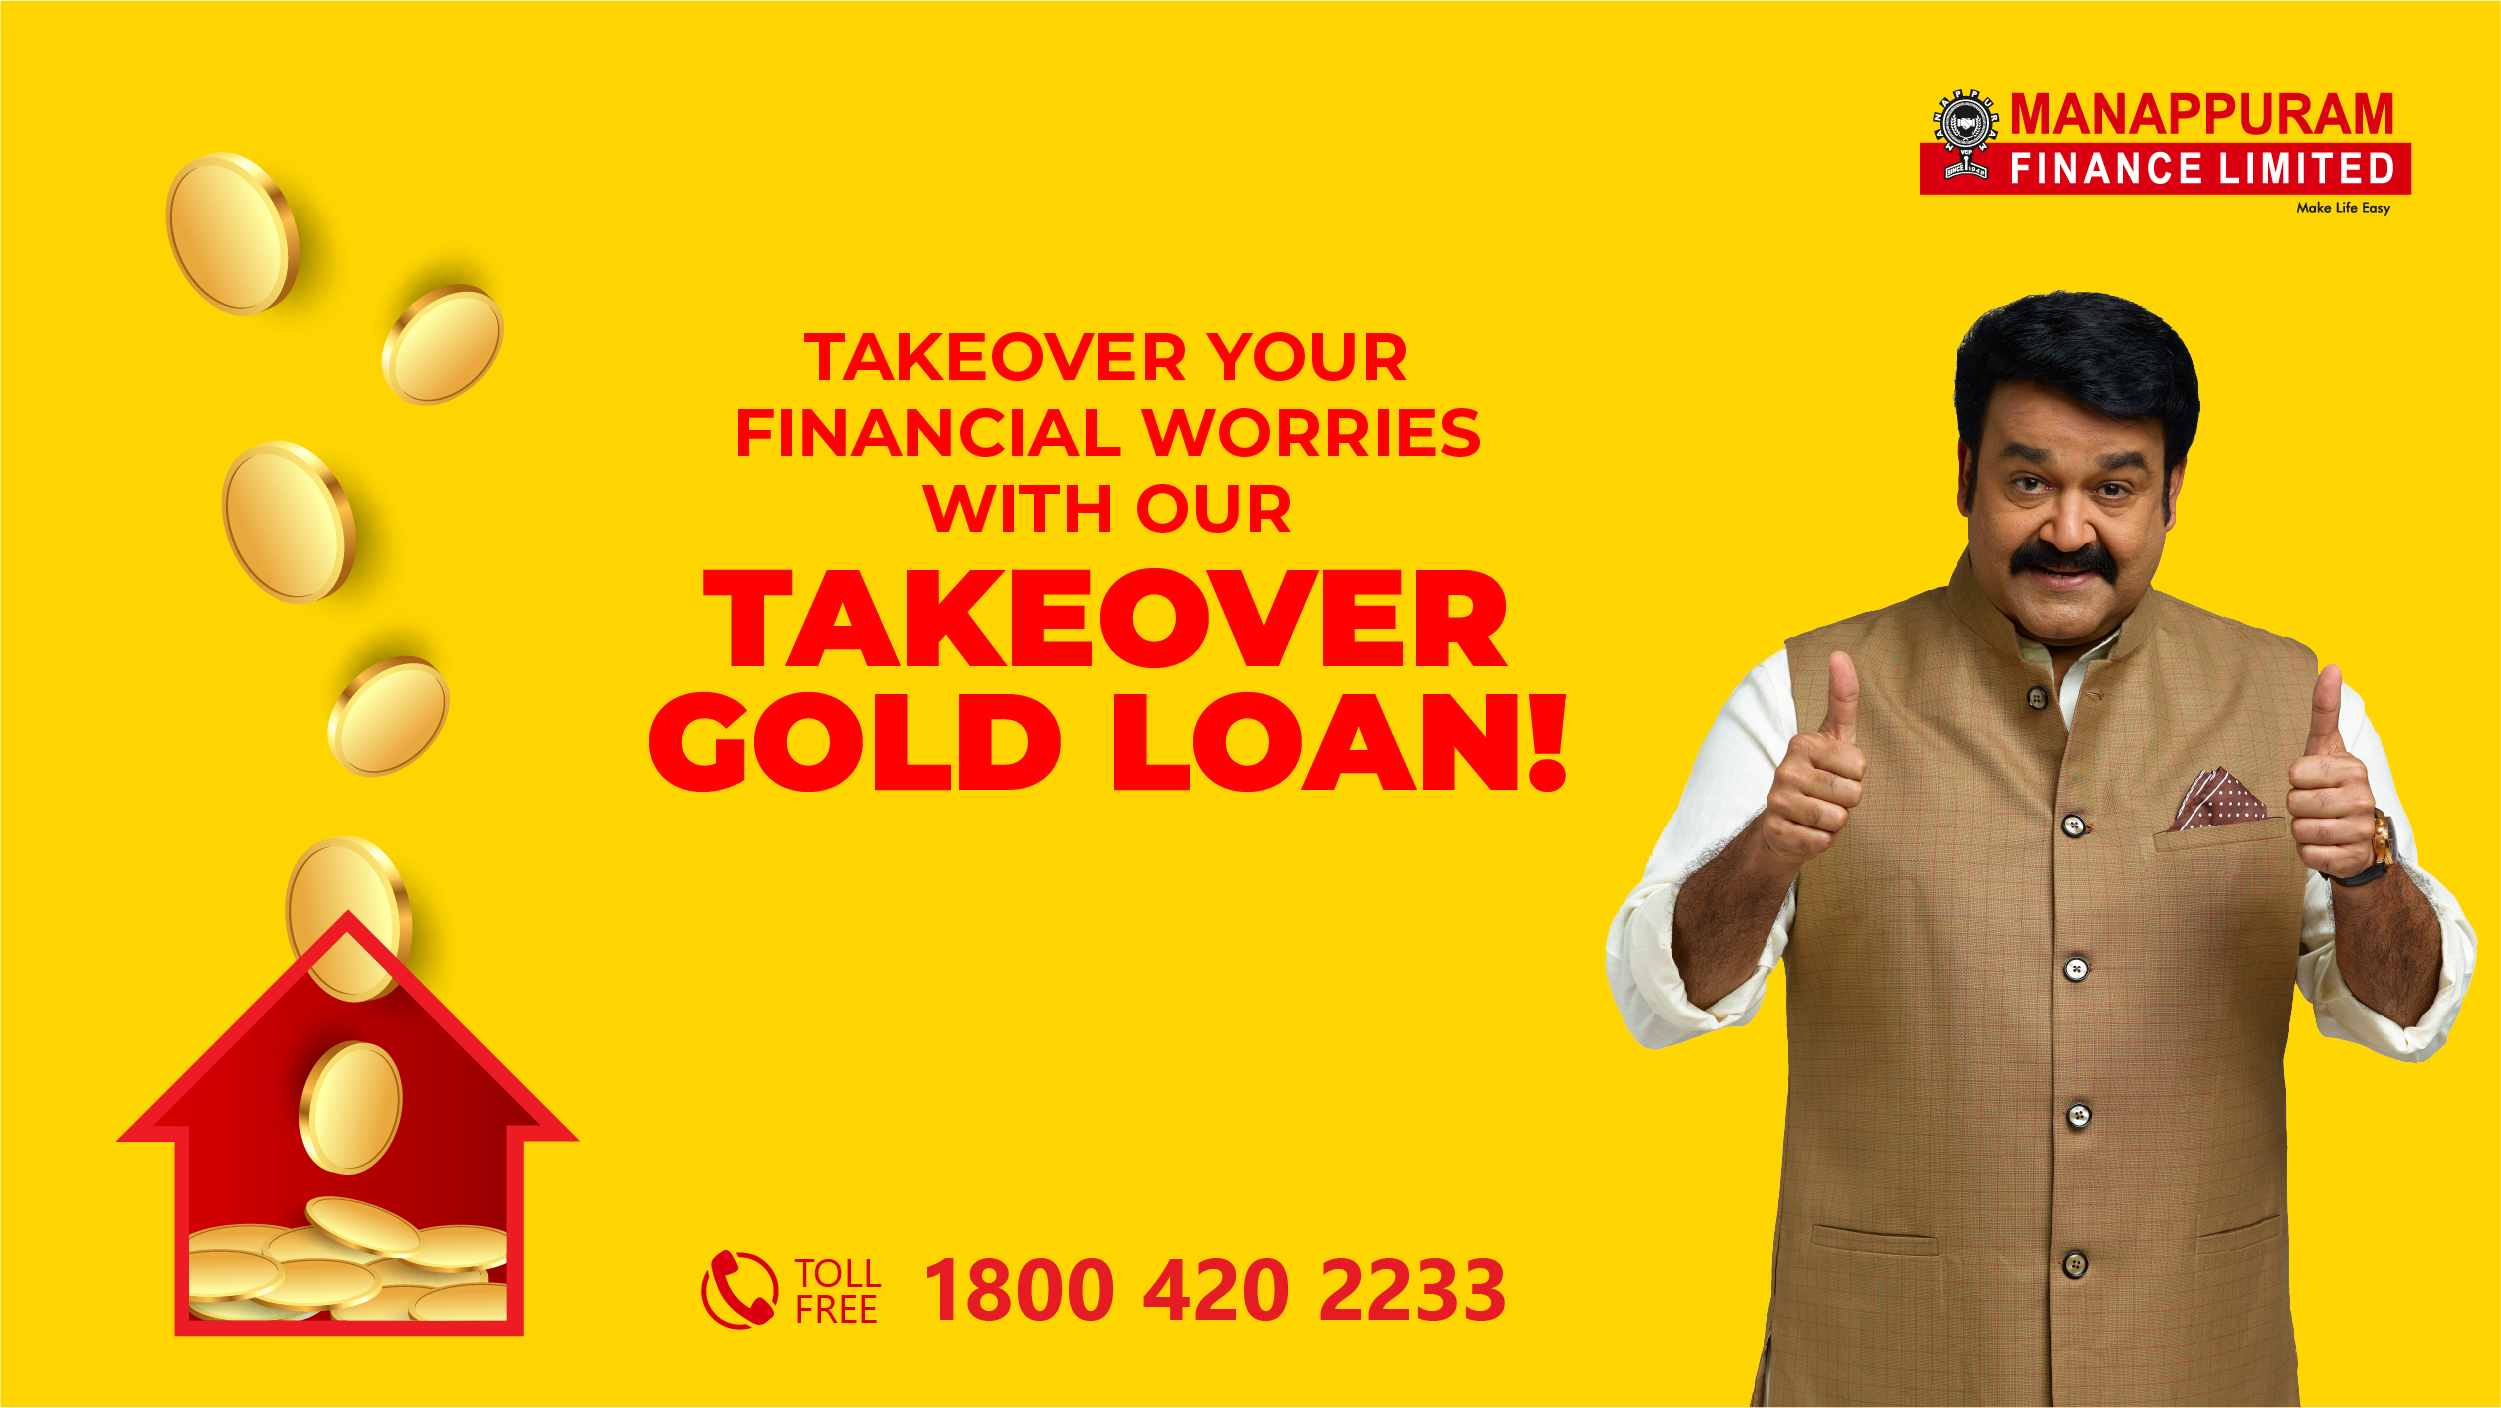 Gold Loan at Manappuram Finance Limited